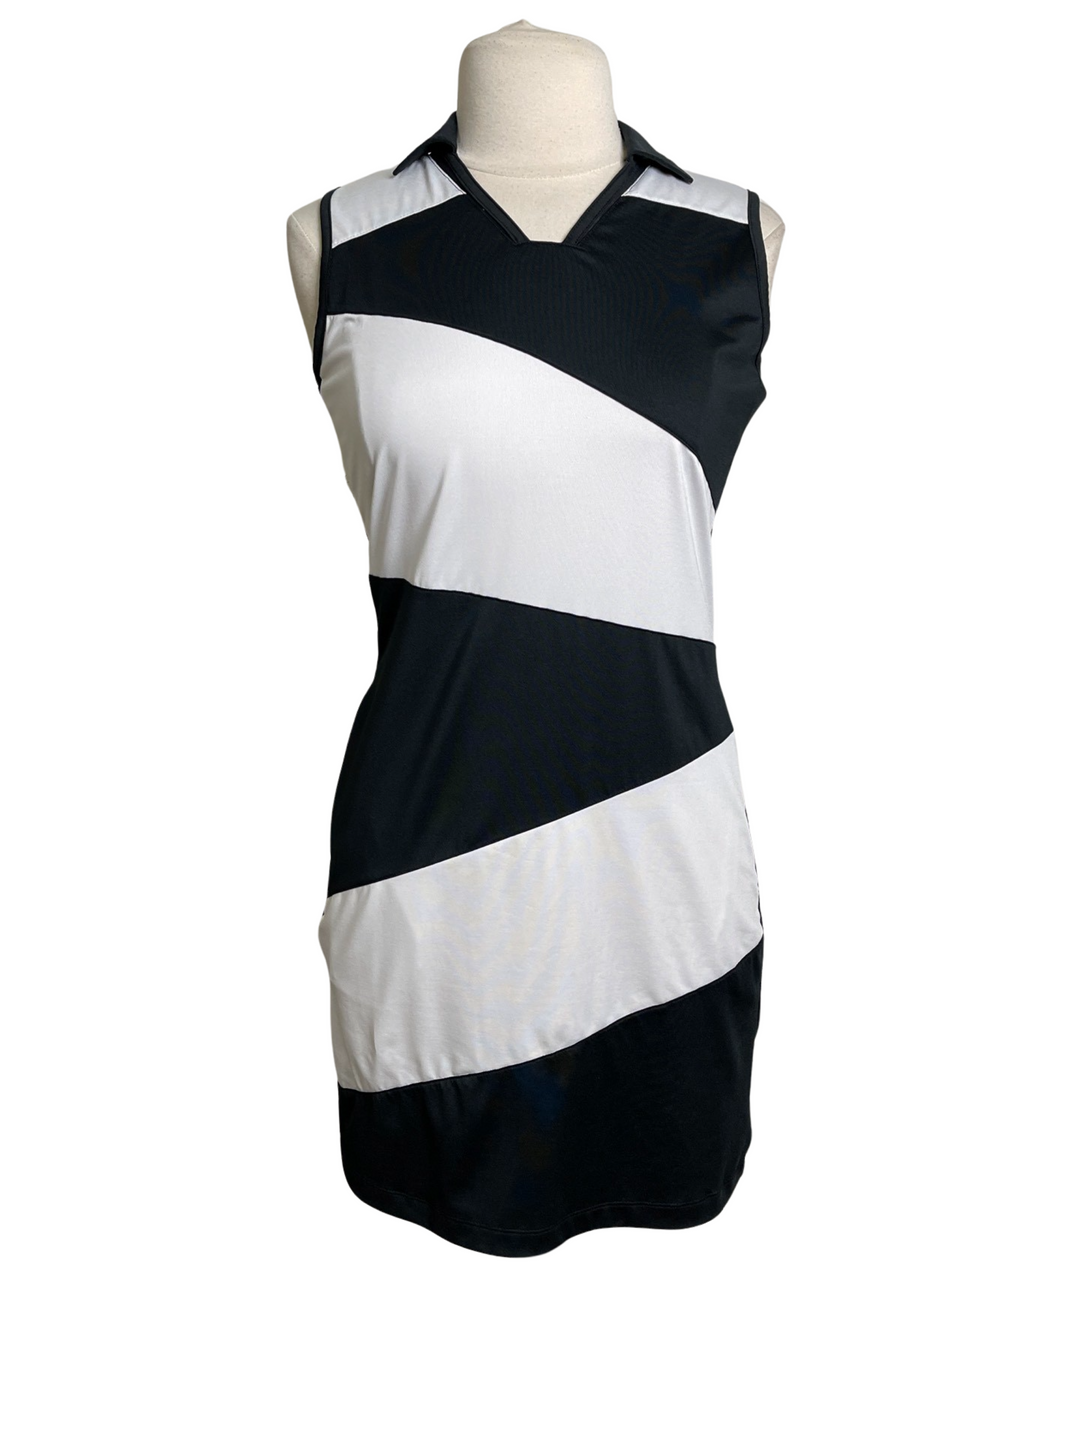 Tail Sleeveless Color Block Golf Dress - Black/White - Small - Skorzie